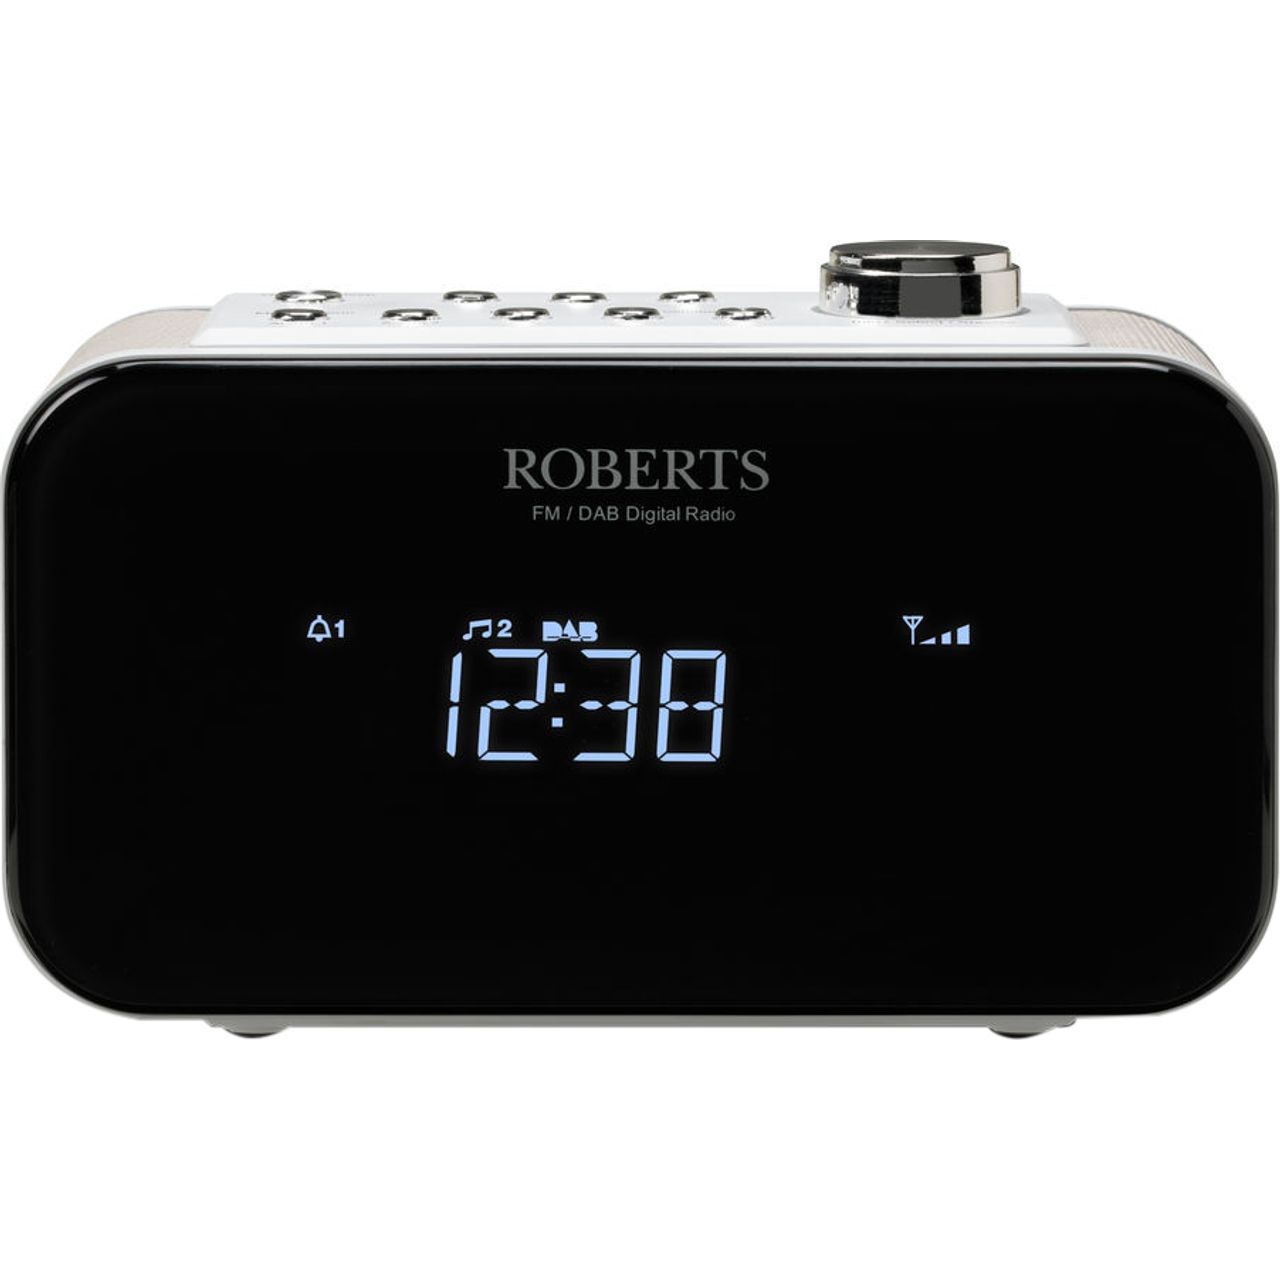 Roberts Radio ORTUS2W DAB / DAB+ Digital Radio with FM Tuner Review